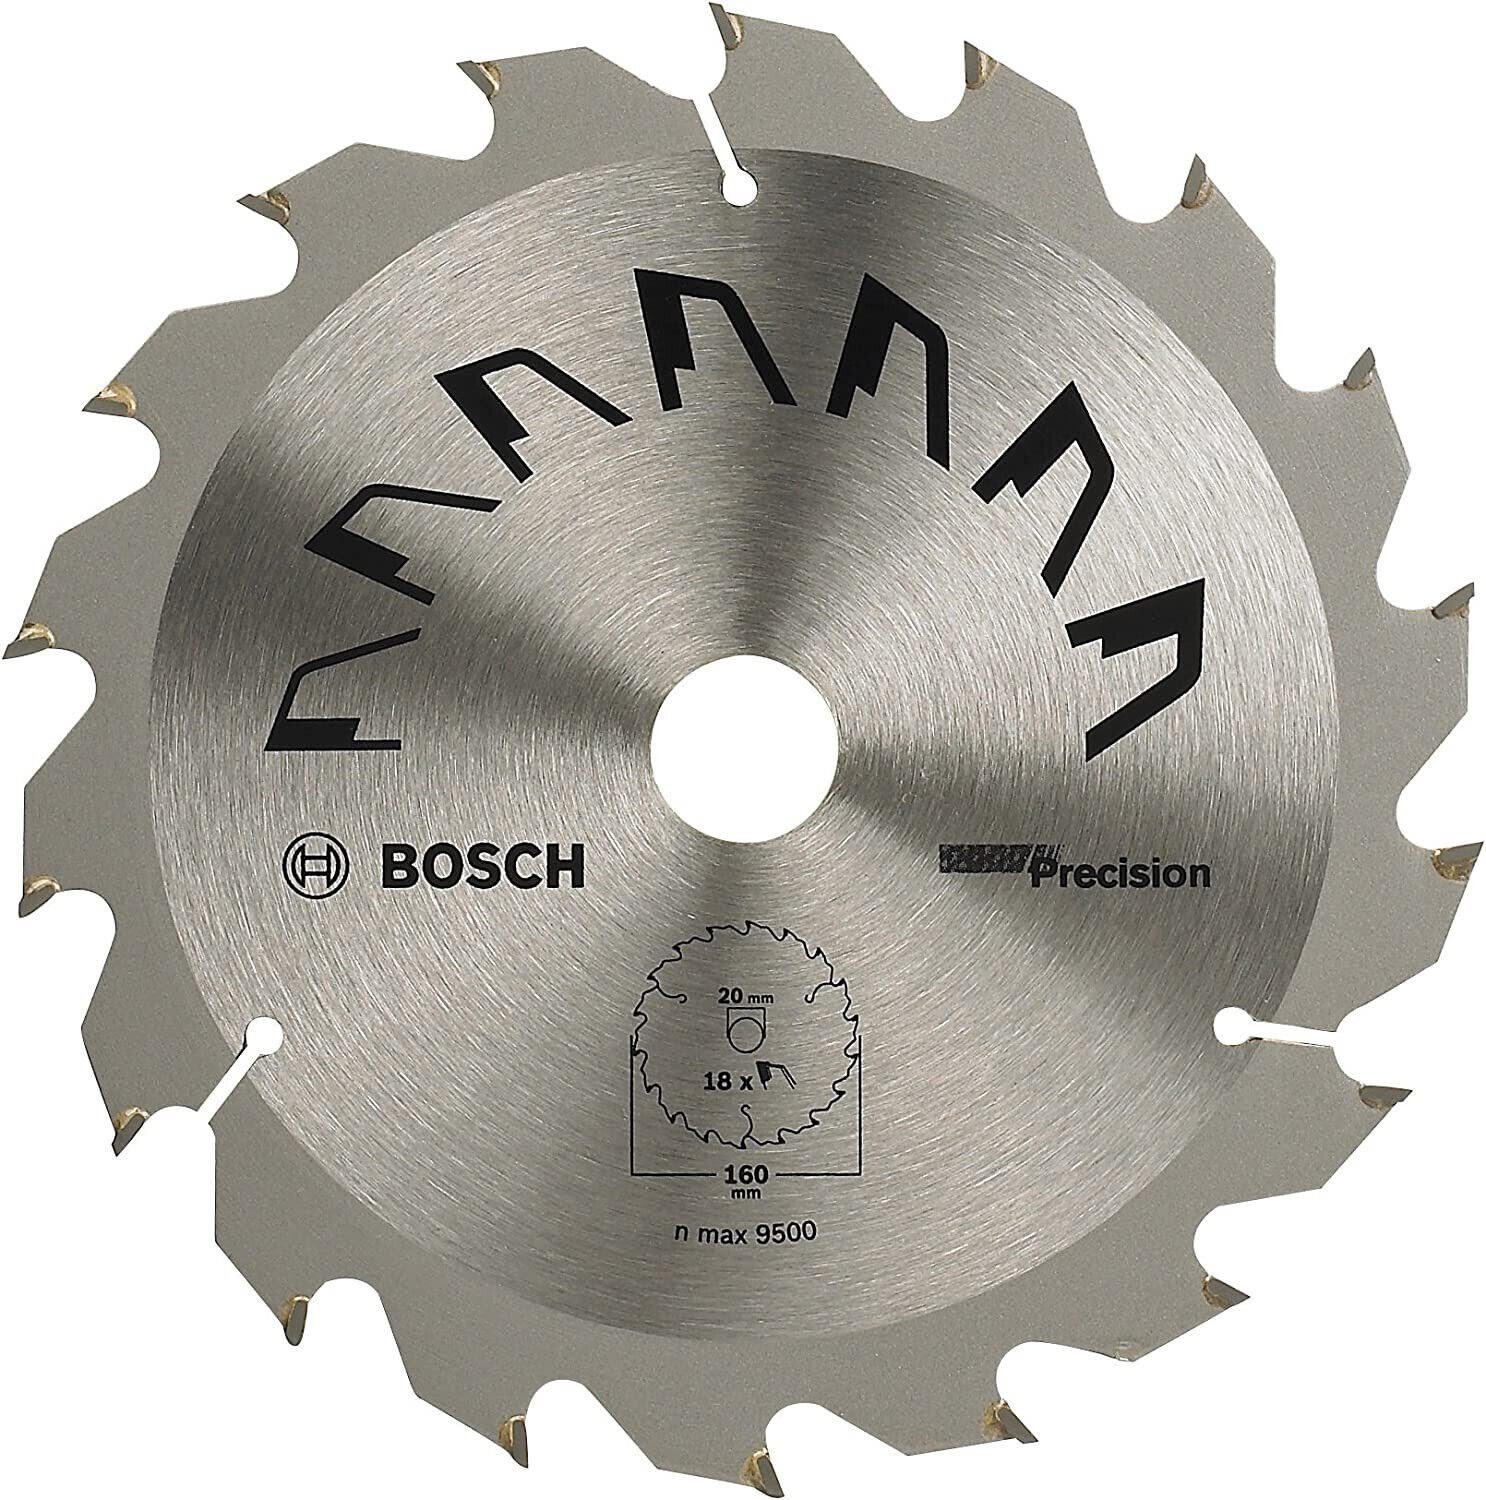 BOSCH Bohrfutter Bosch 2609256855 Kreissägeblatt Precision 160 x 2 x 20/16 Z18 Sägebla